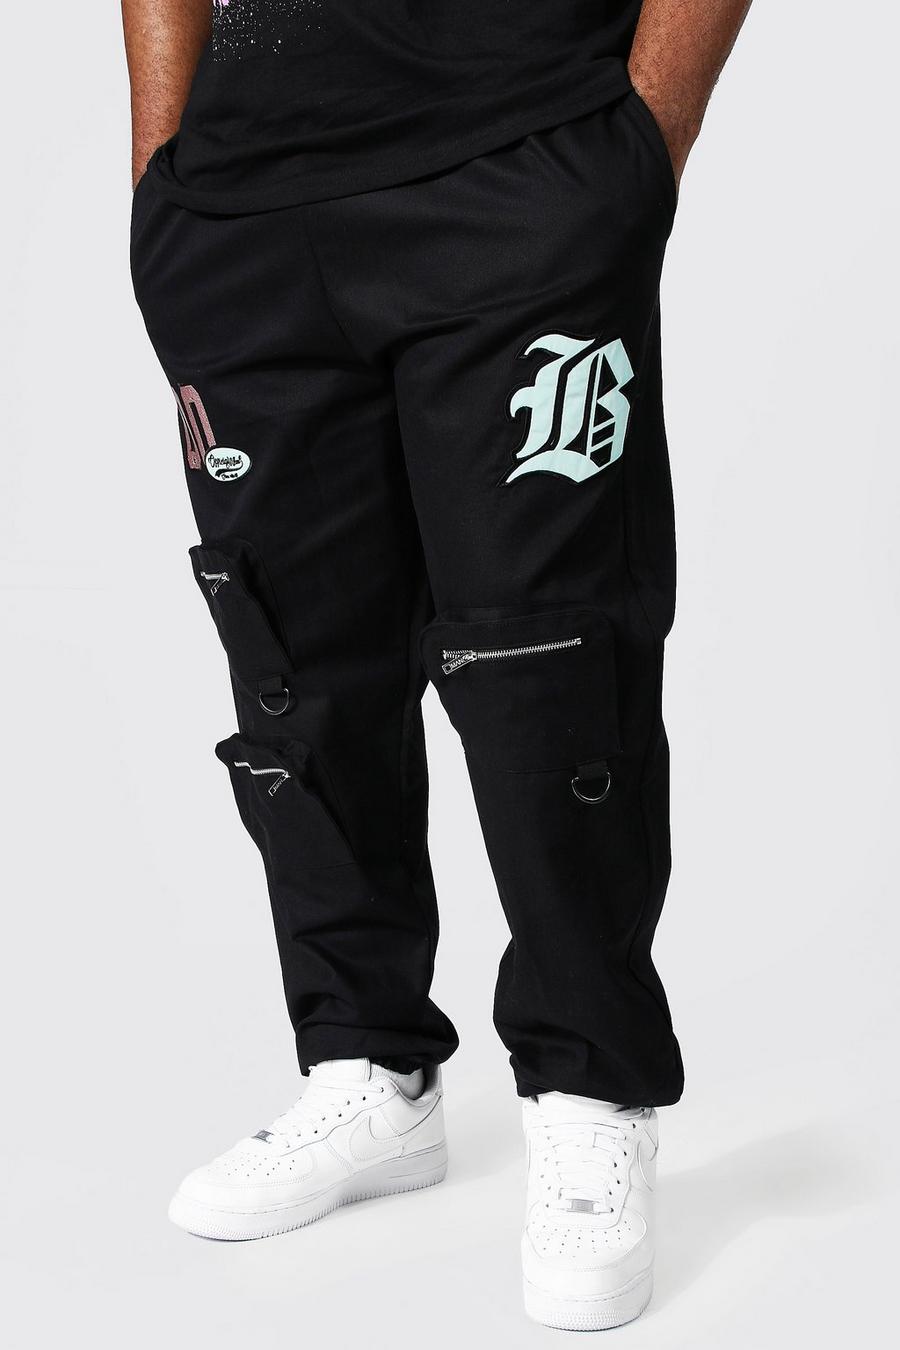 Pantalón deportivo Plus universitario con bolsillos cargo, Black nero image number 1